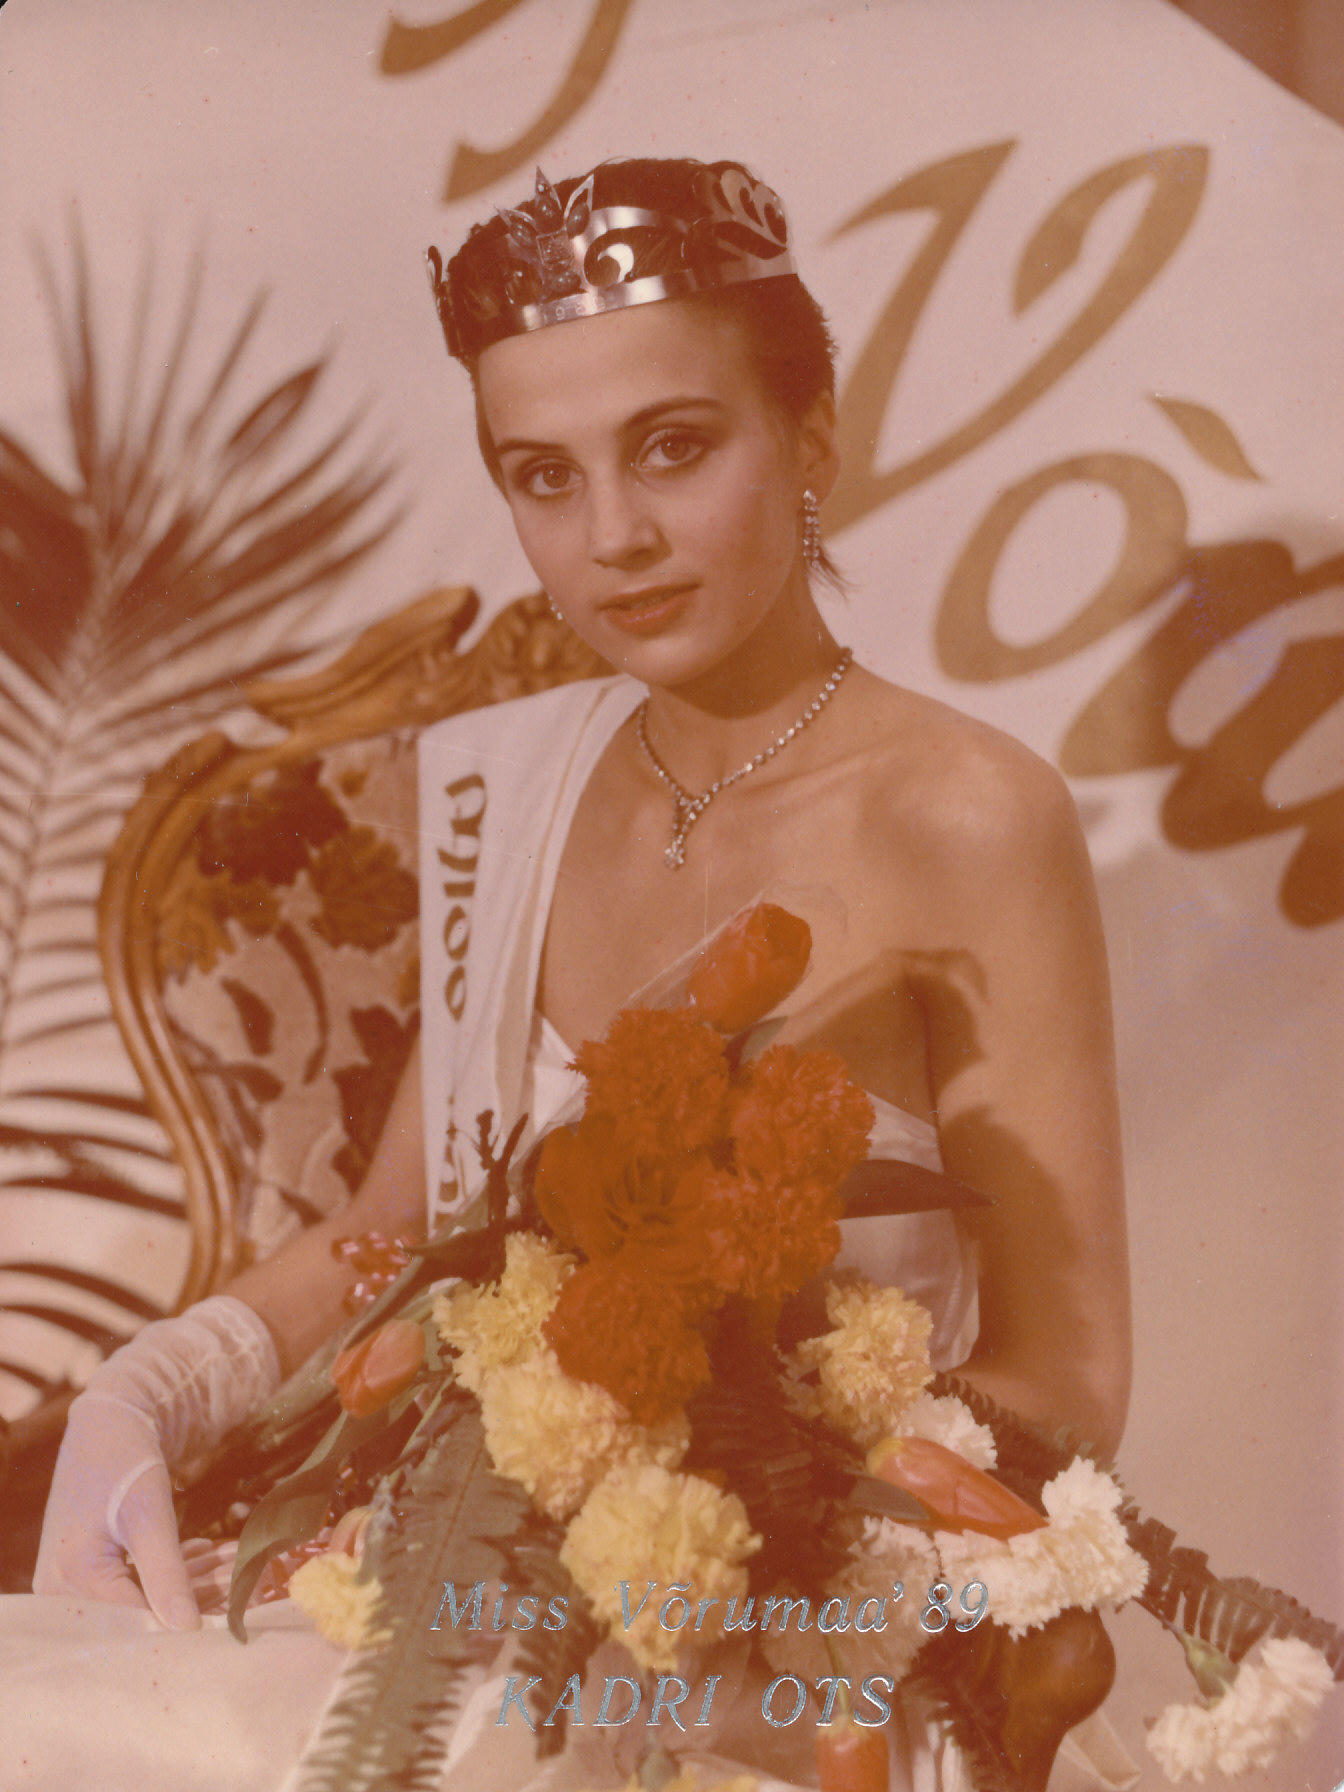 Foto. Miss Võrumaa Kadri Ots - 08.märtsil 1989.a.